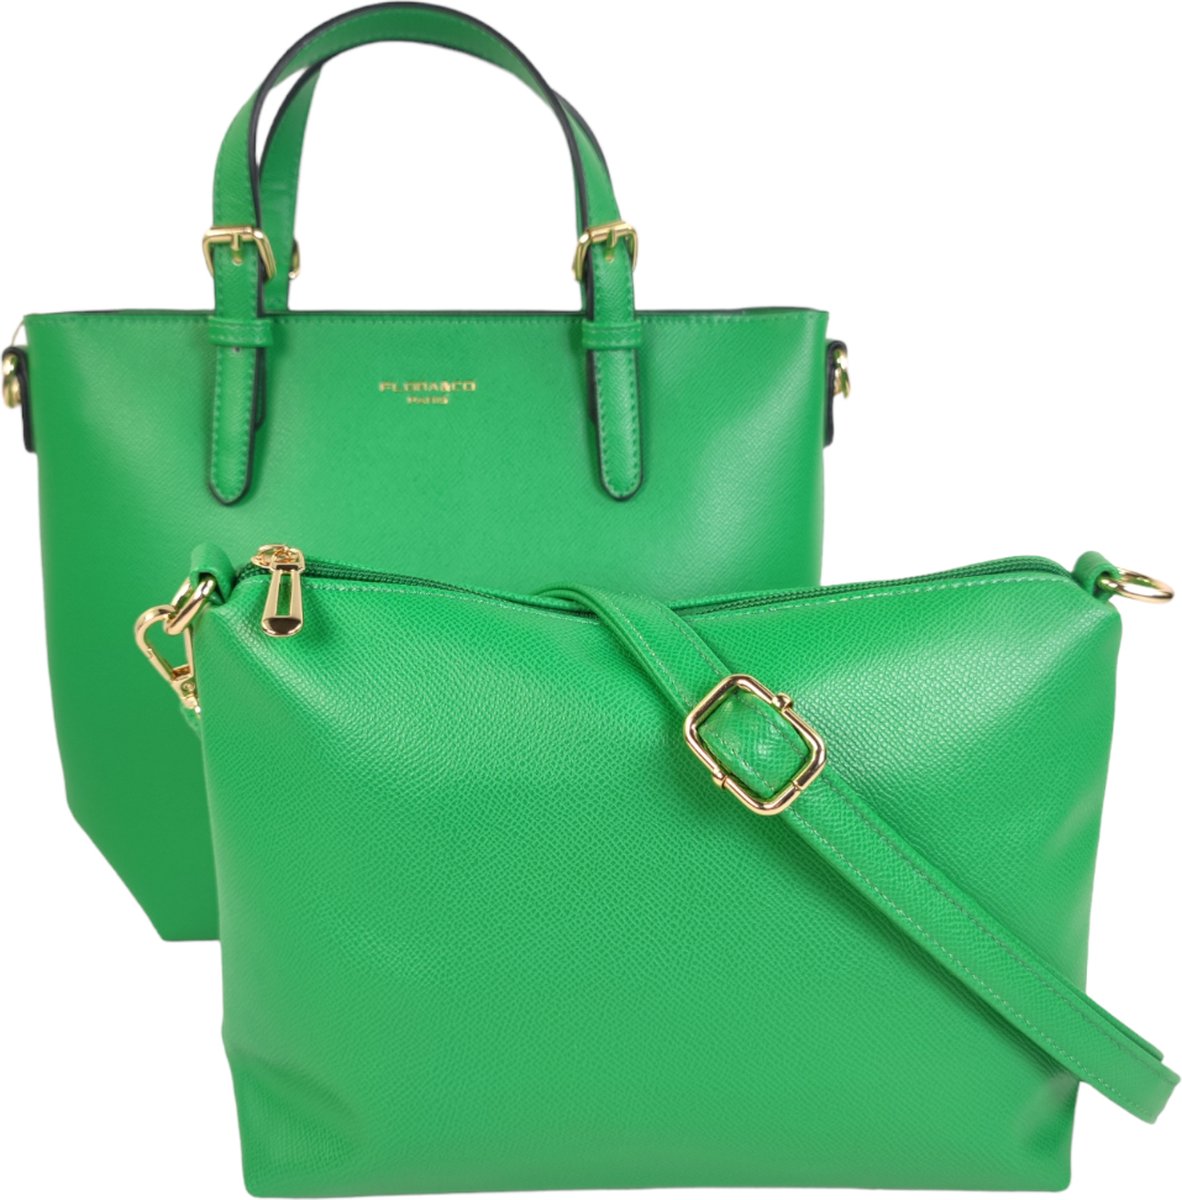 Flora&Co - Paris - Tas in tas/bag in bag - handtas/crossbody groen